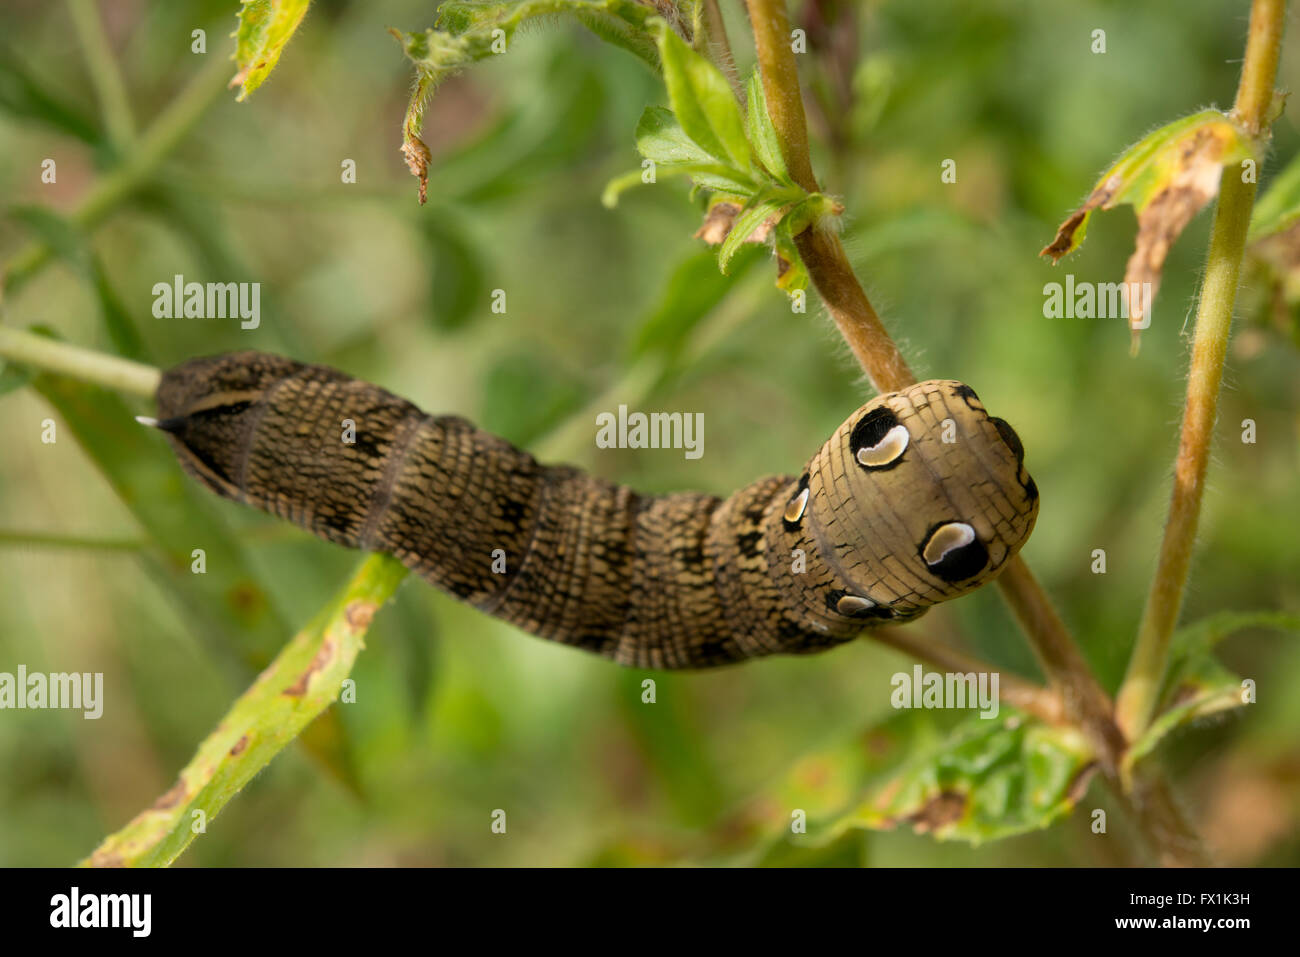 Elephant hawkmoth caterpillar showing defensive eye spots Stock Photo